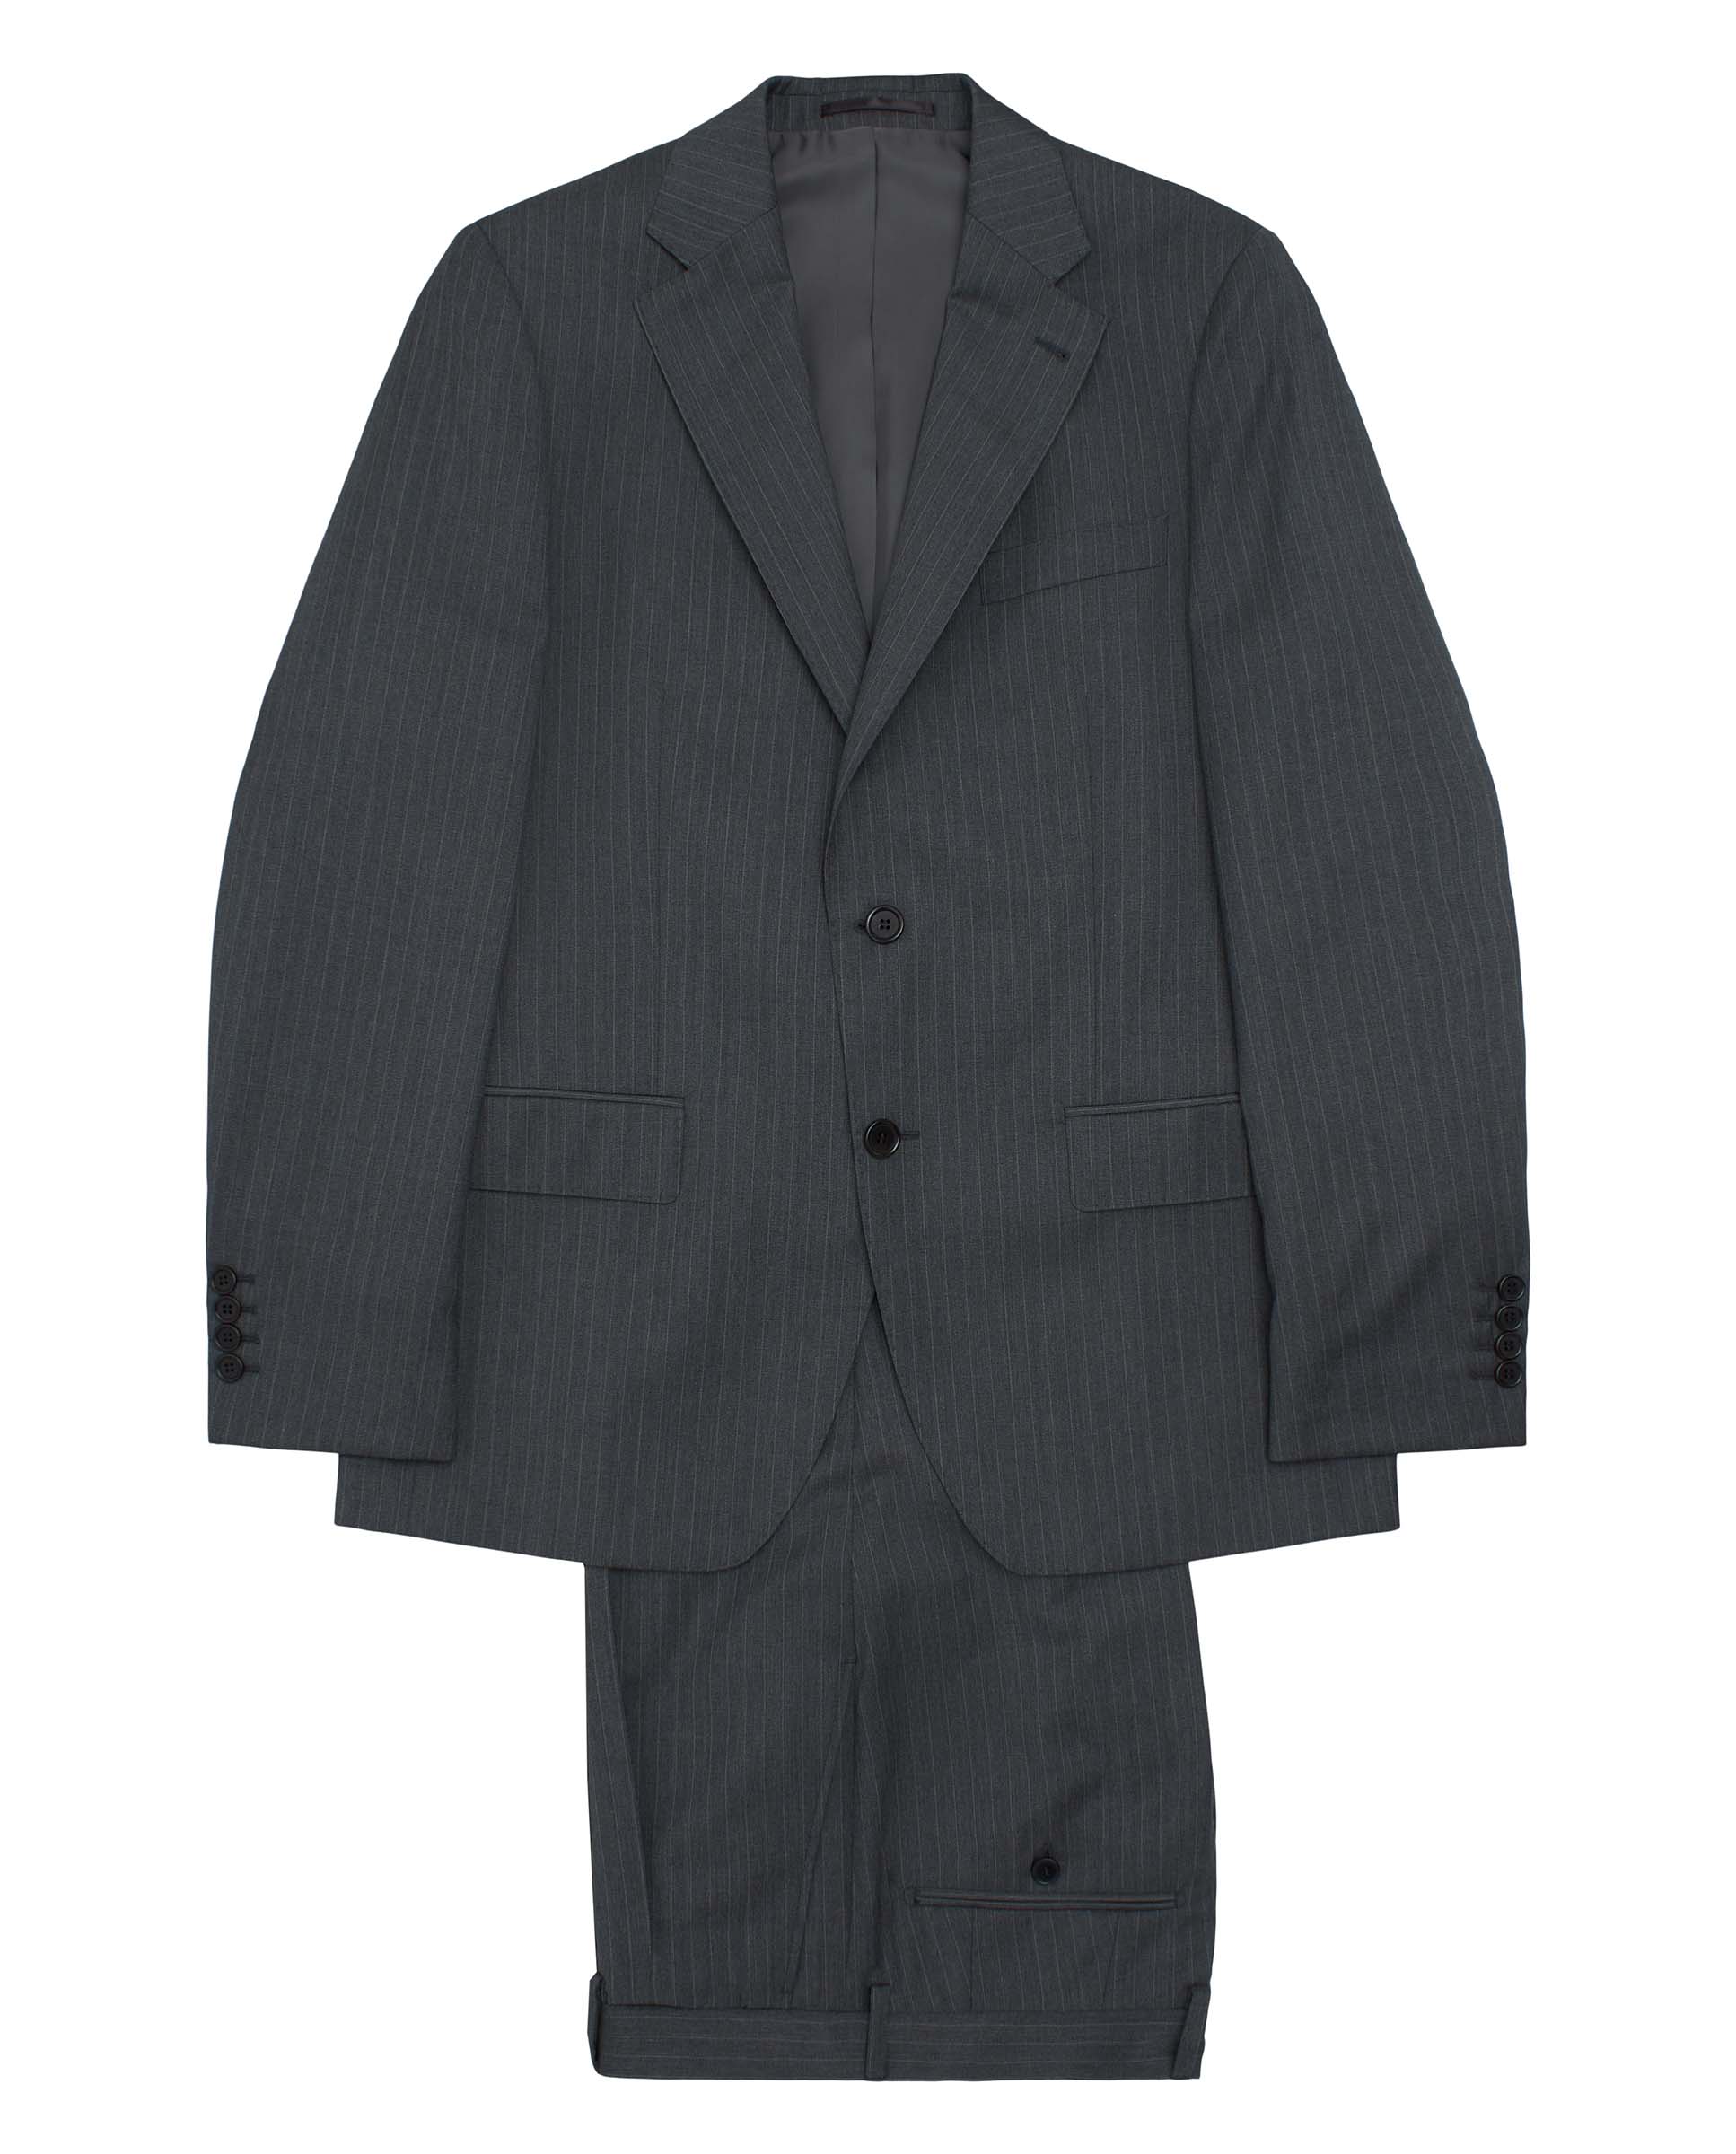 Gray pin stripe wool suit by MIRTO